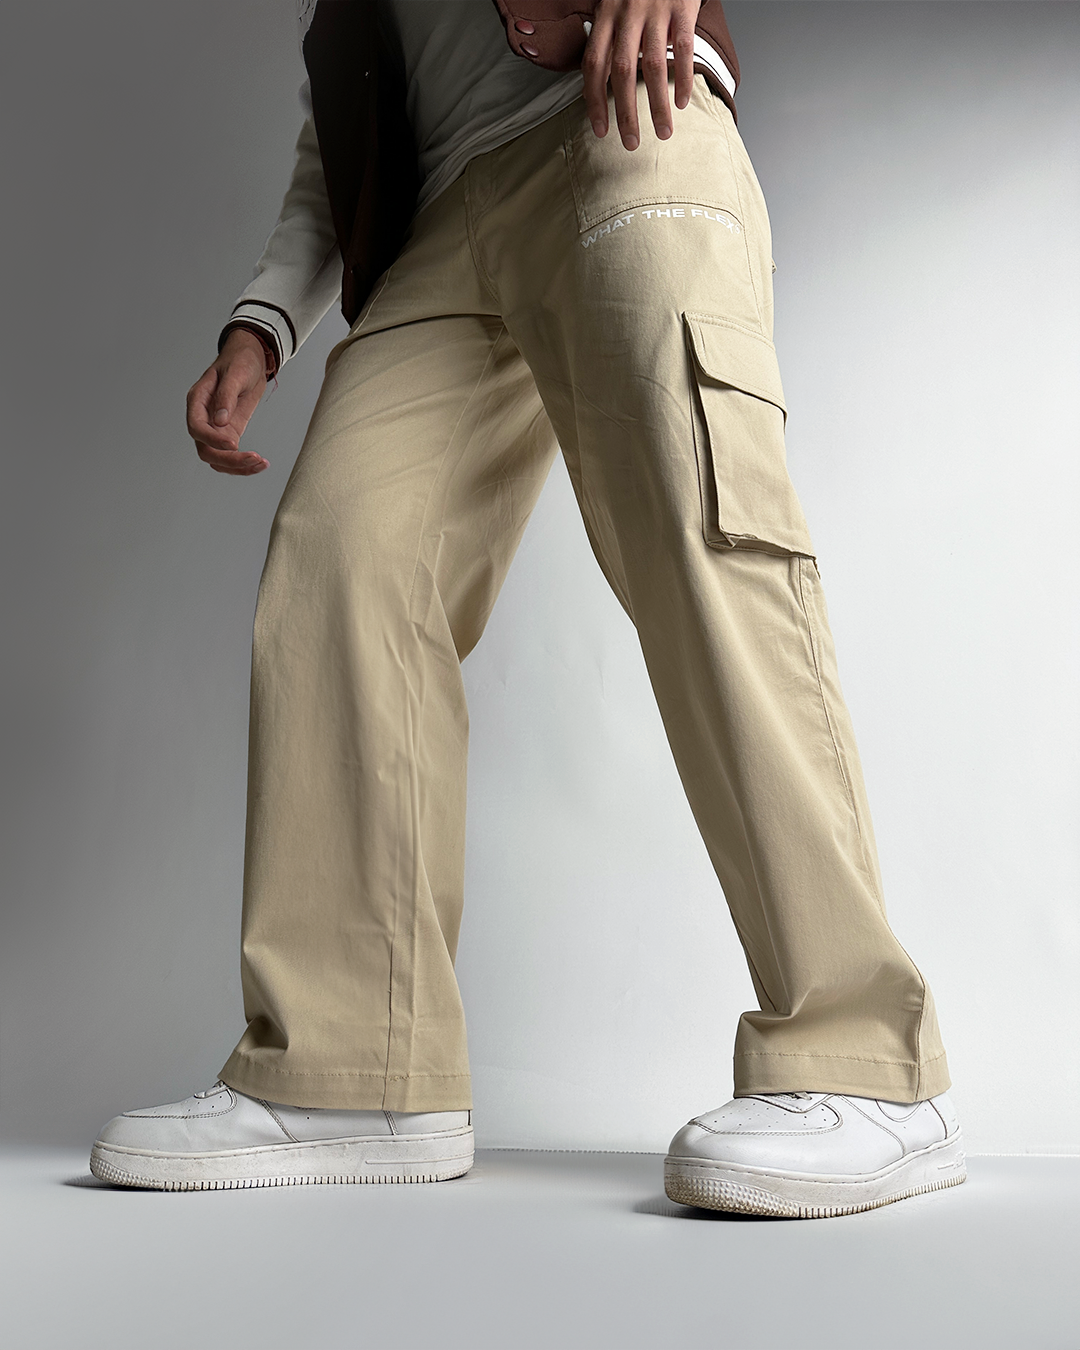 6 Pocket Cargo Pants/trousers- ( Black) at Dominance – Dominance PK